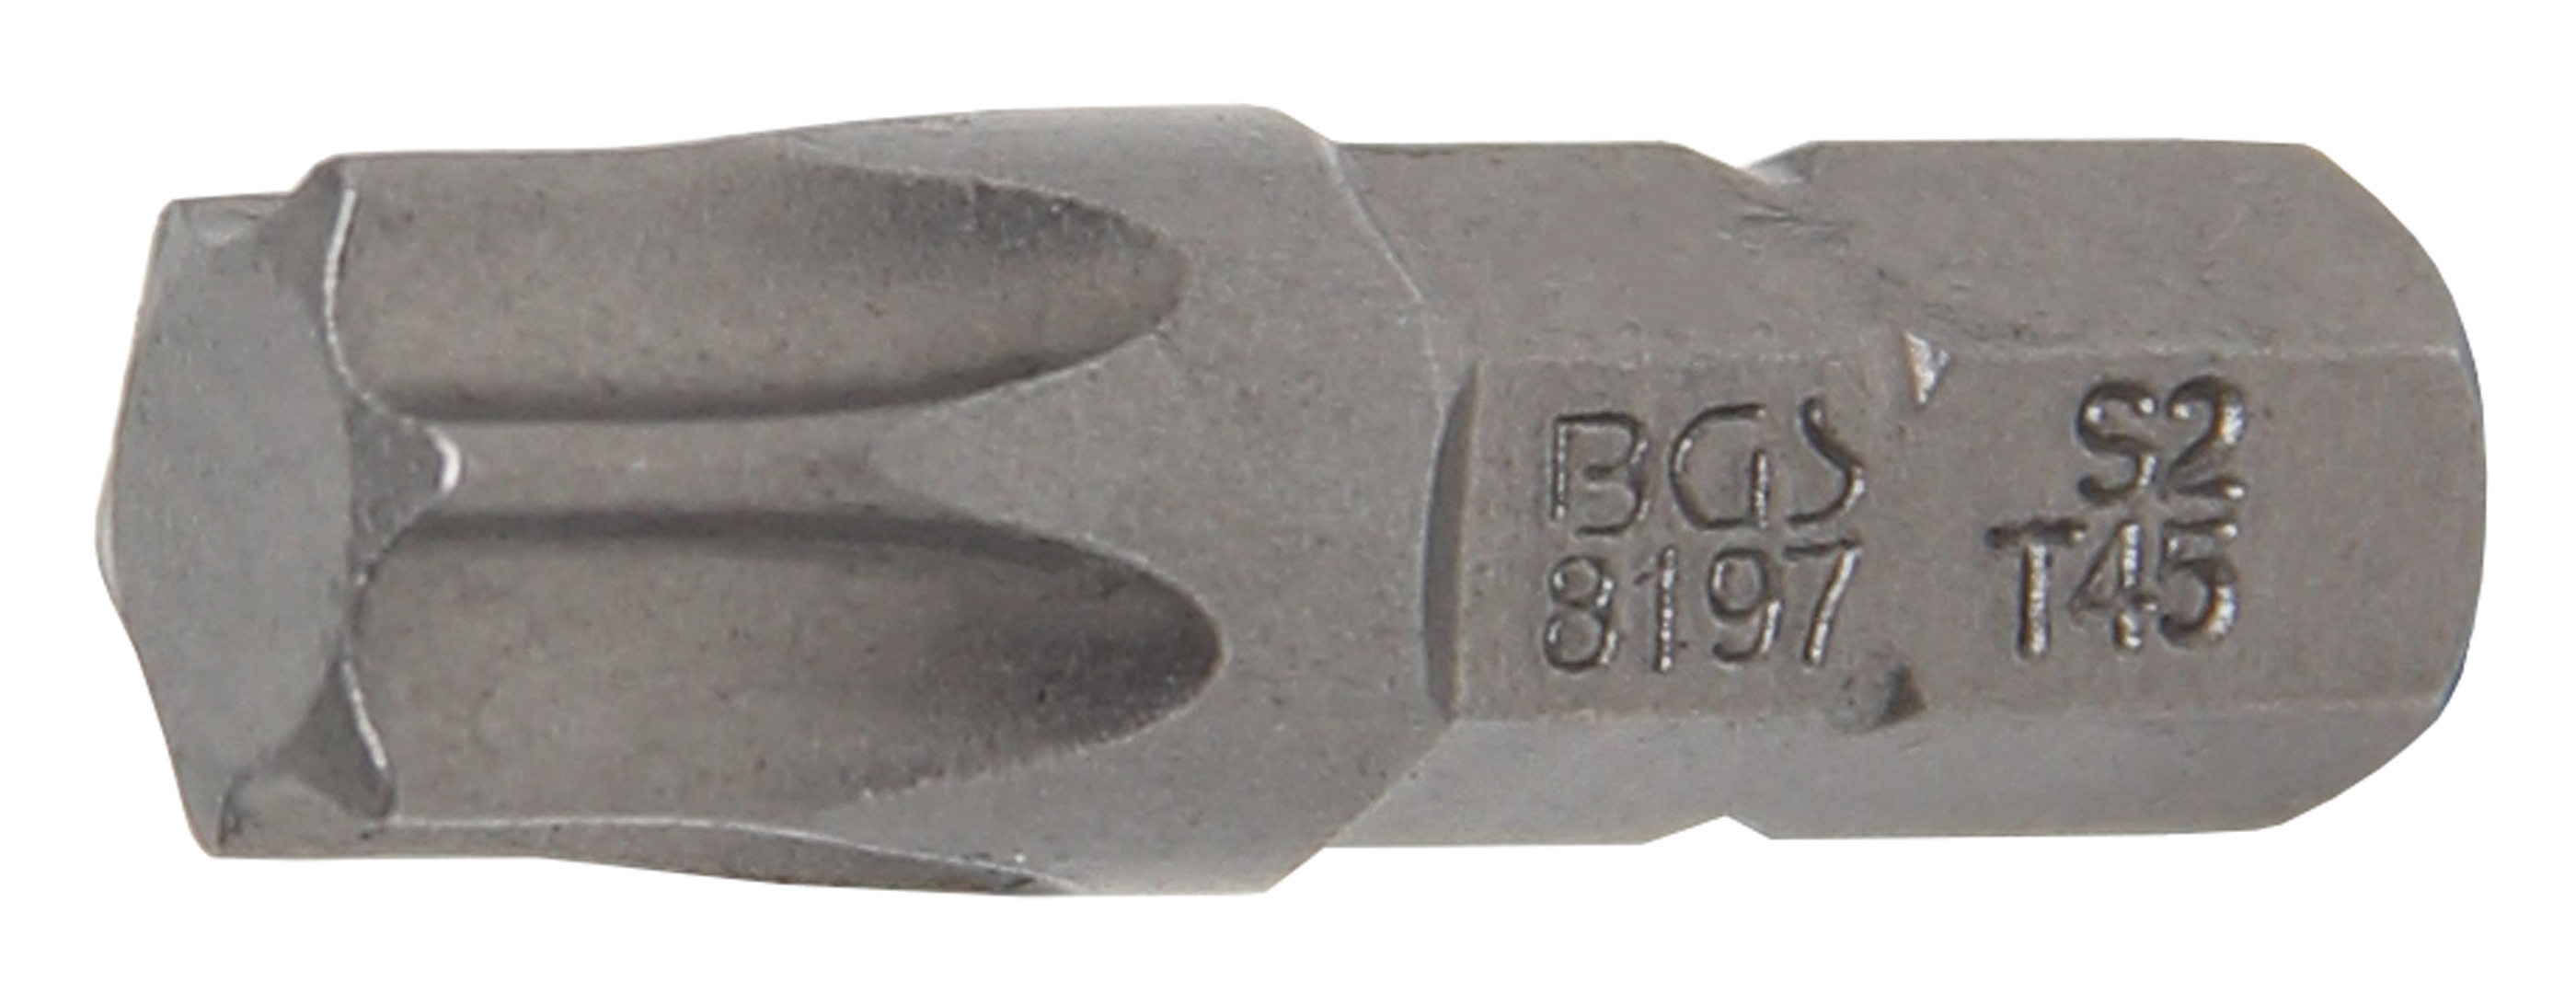 BGS Bit | Länge 25 mm | Antrieb Außensechskant 6,3 mm (1/4") | T-Profil (für Torx) T45